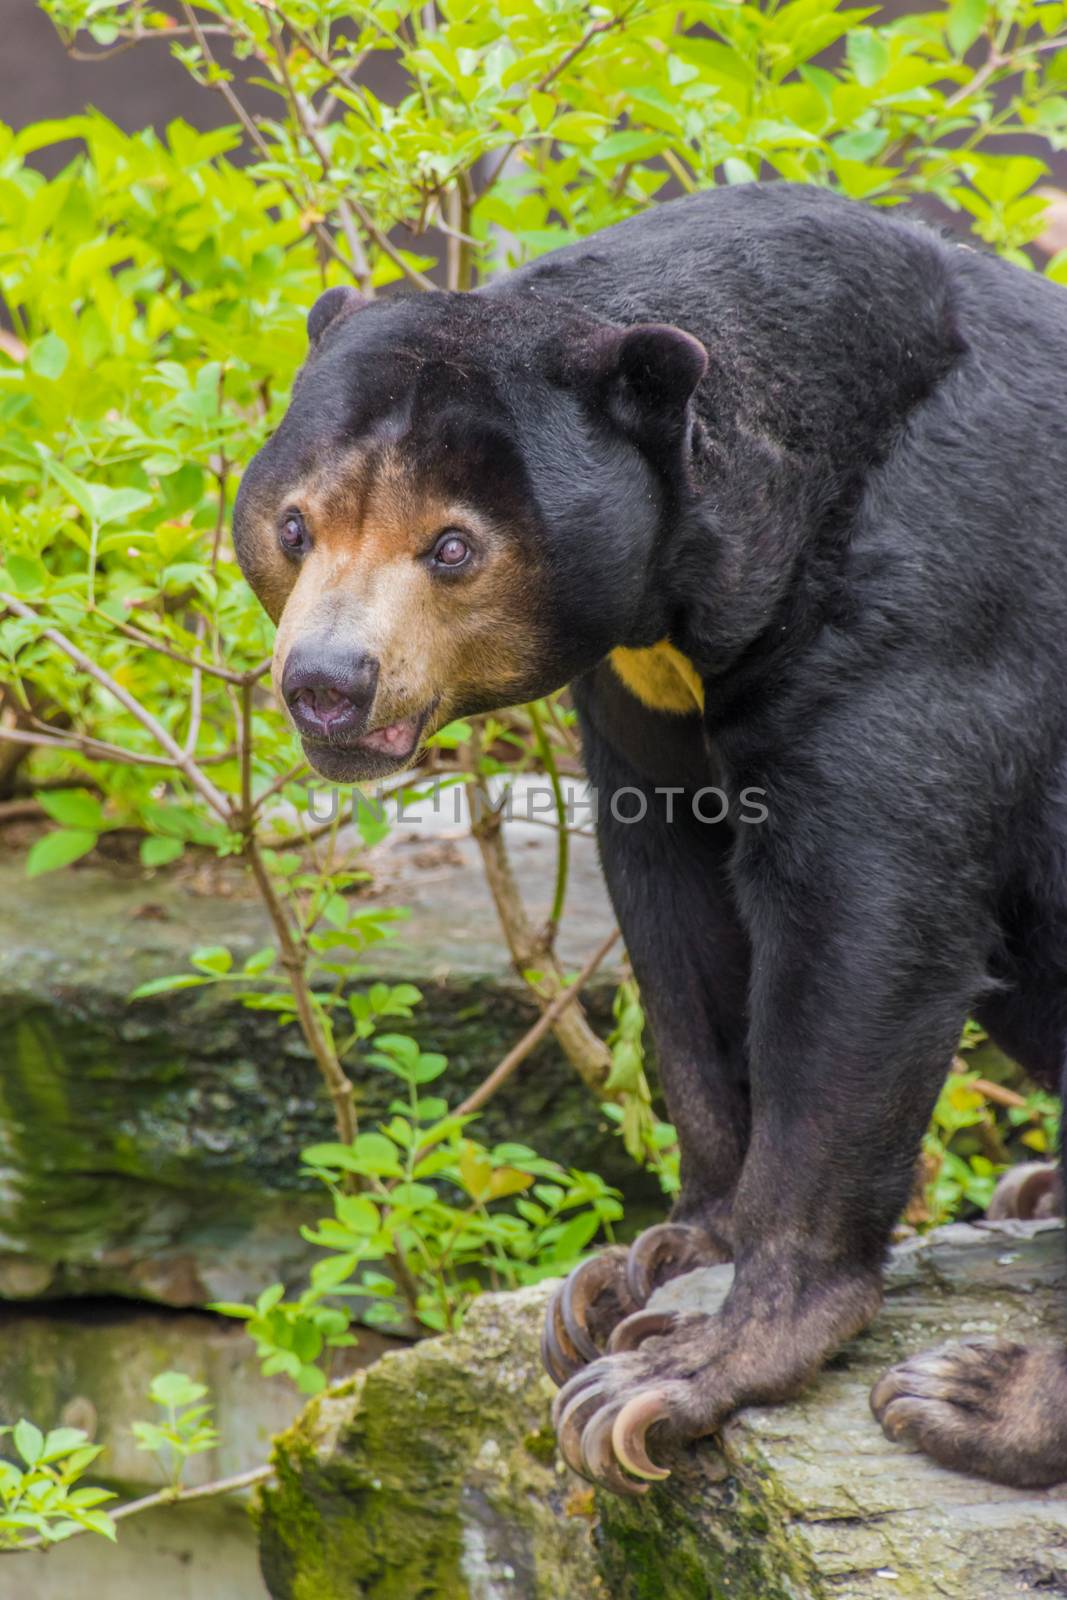 Honey or sun bear siiting on a rock